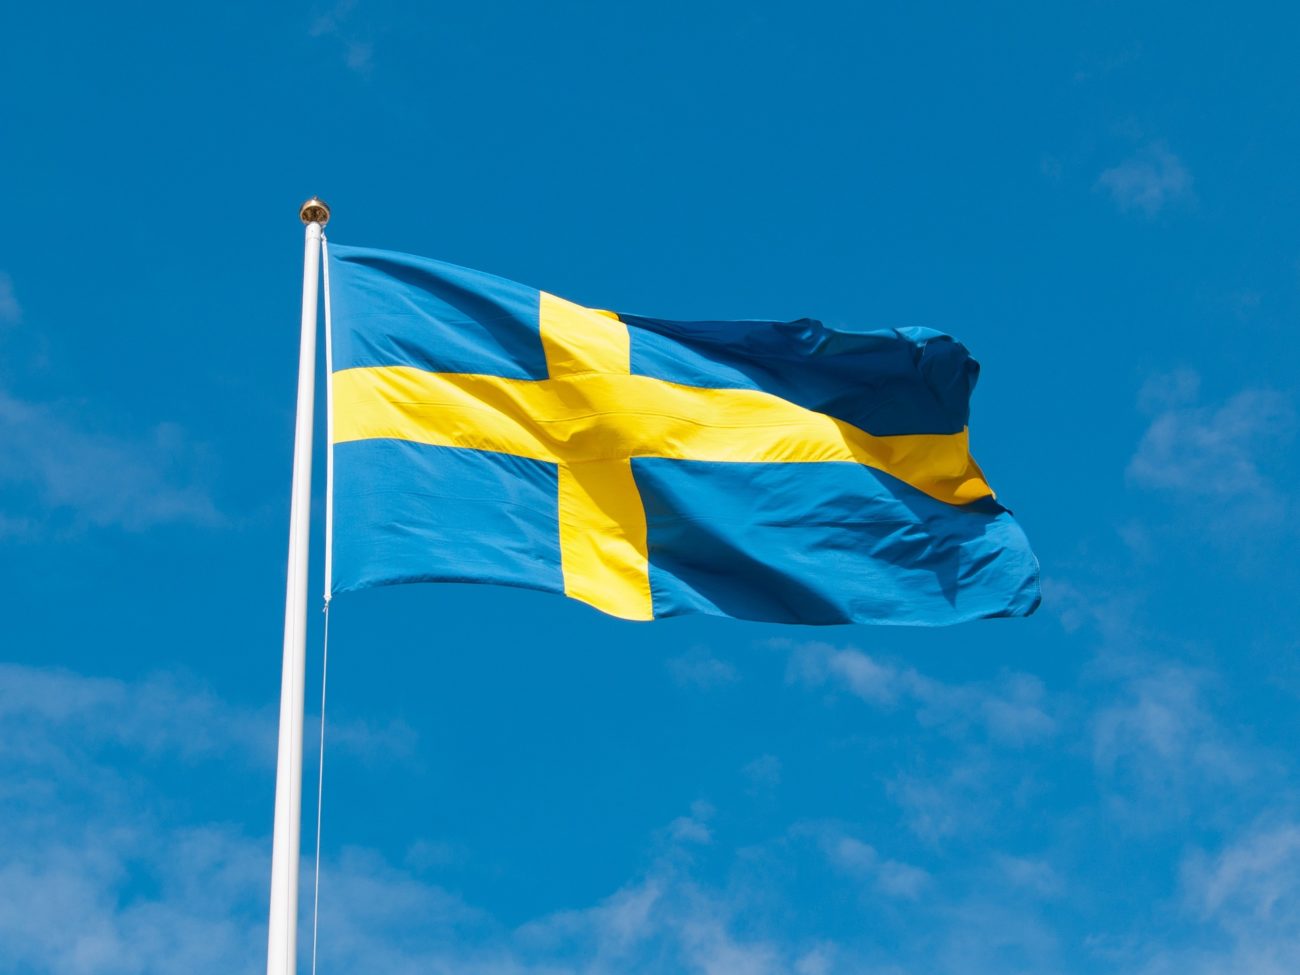 Sweden’s gambling self-exclusion scheme surpasses 80,000 registrations